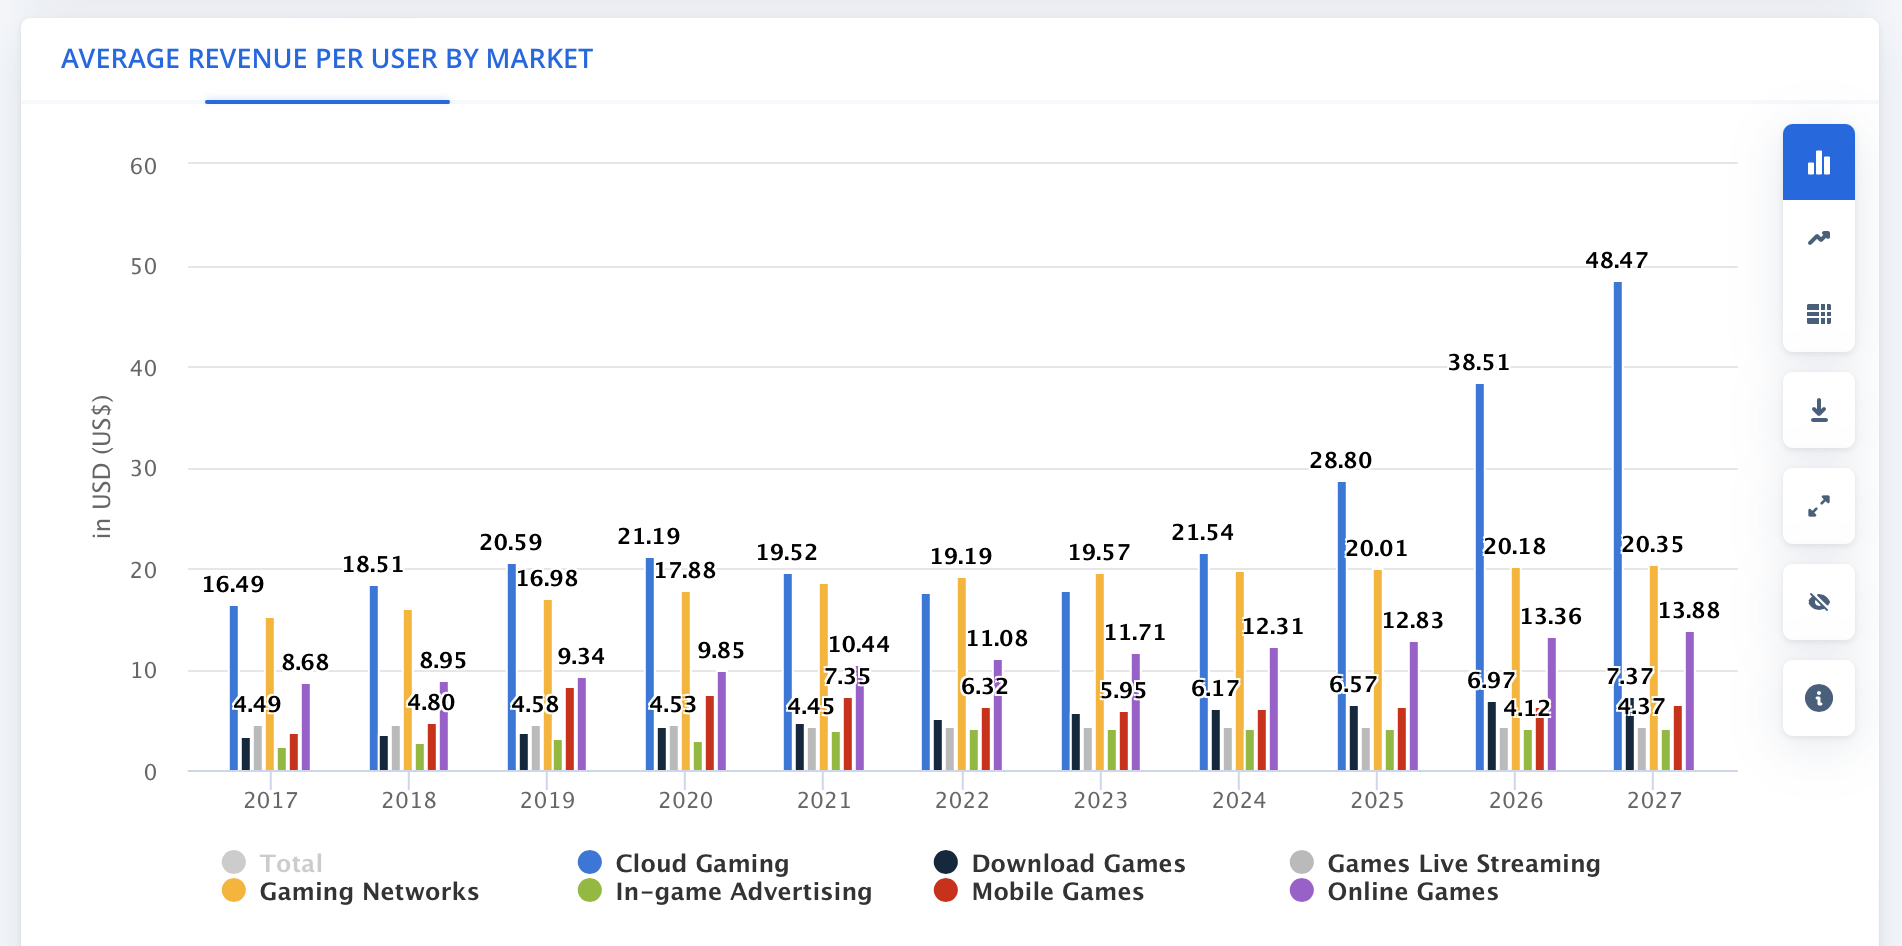 Average revenue per user in different gaming segments